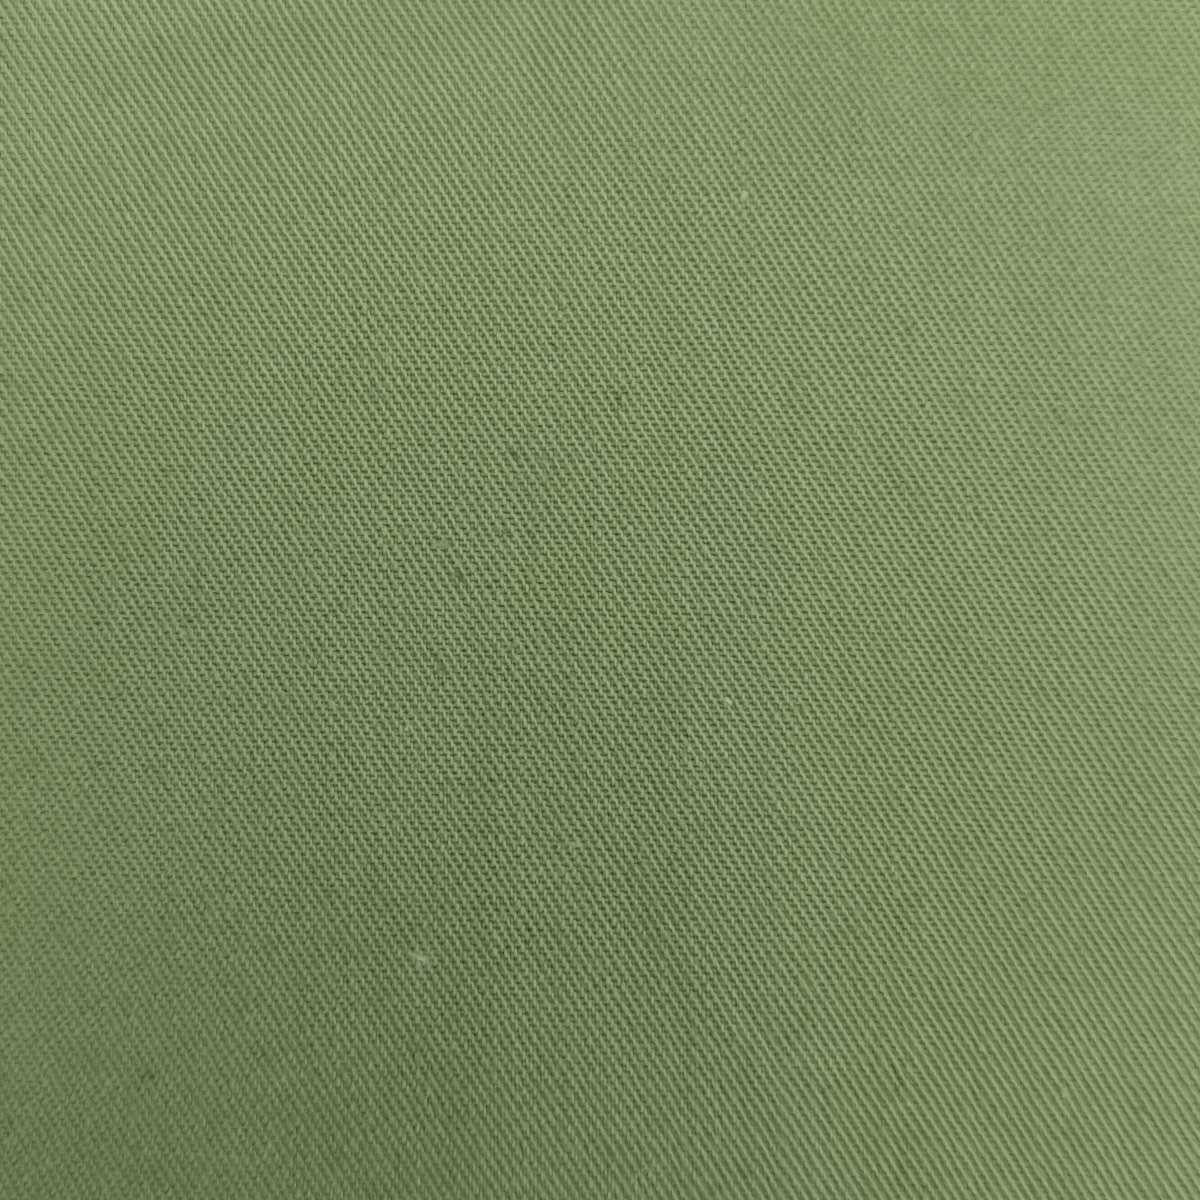 Dark Green Shadow Play Cotton Fabric